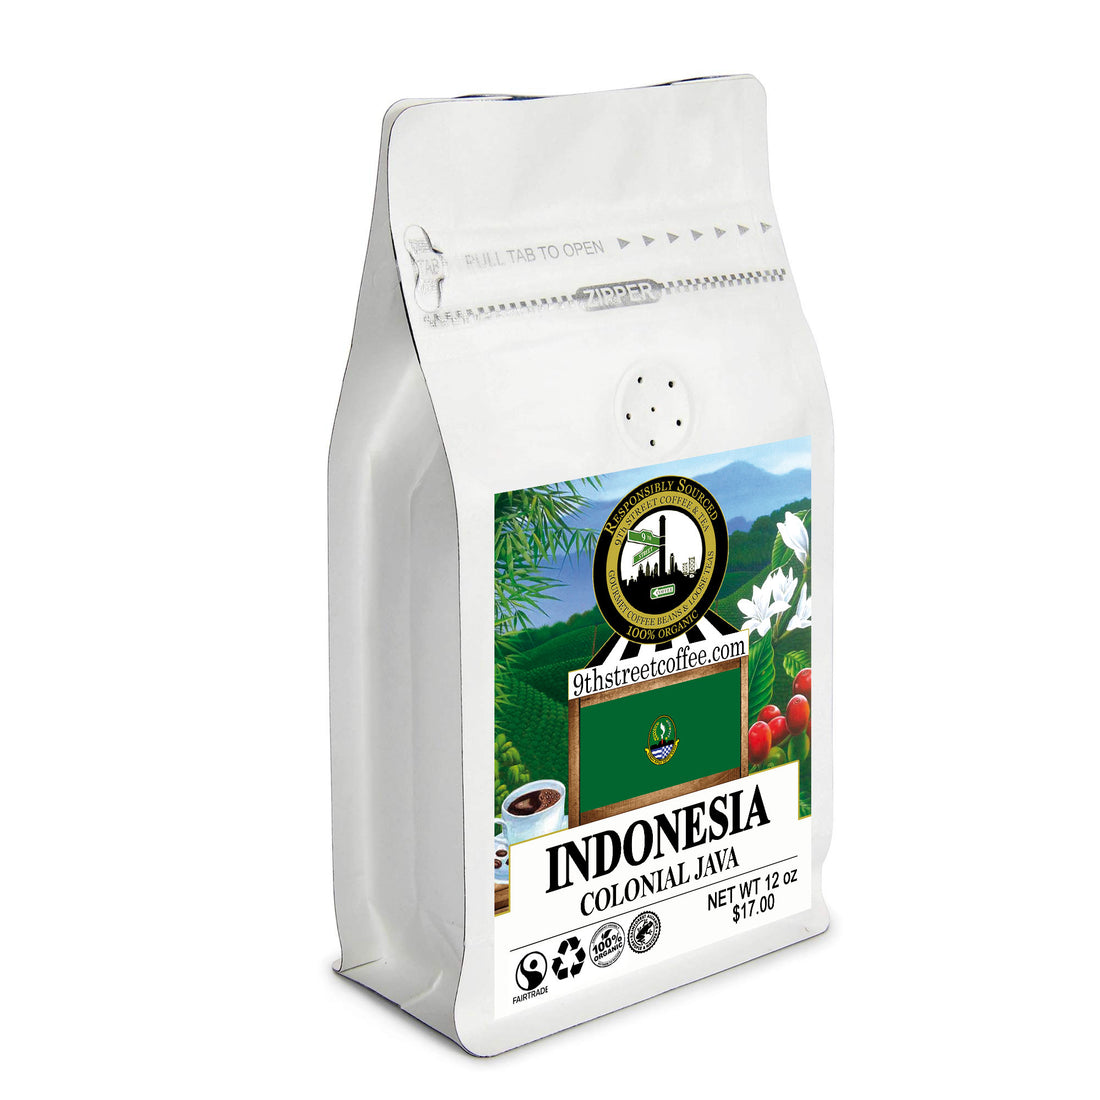 Organic Indonesian Colonial Java Coffee